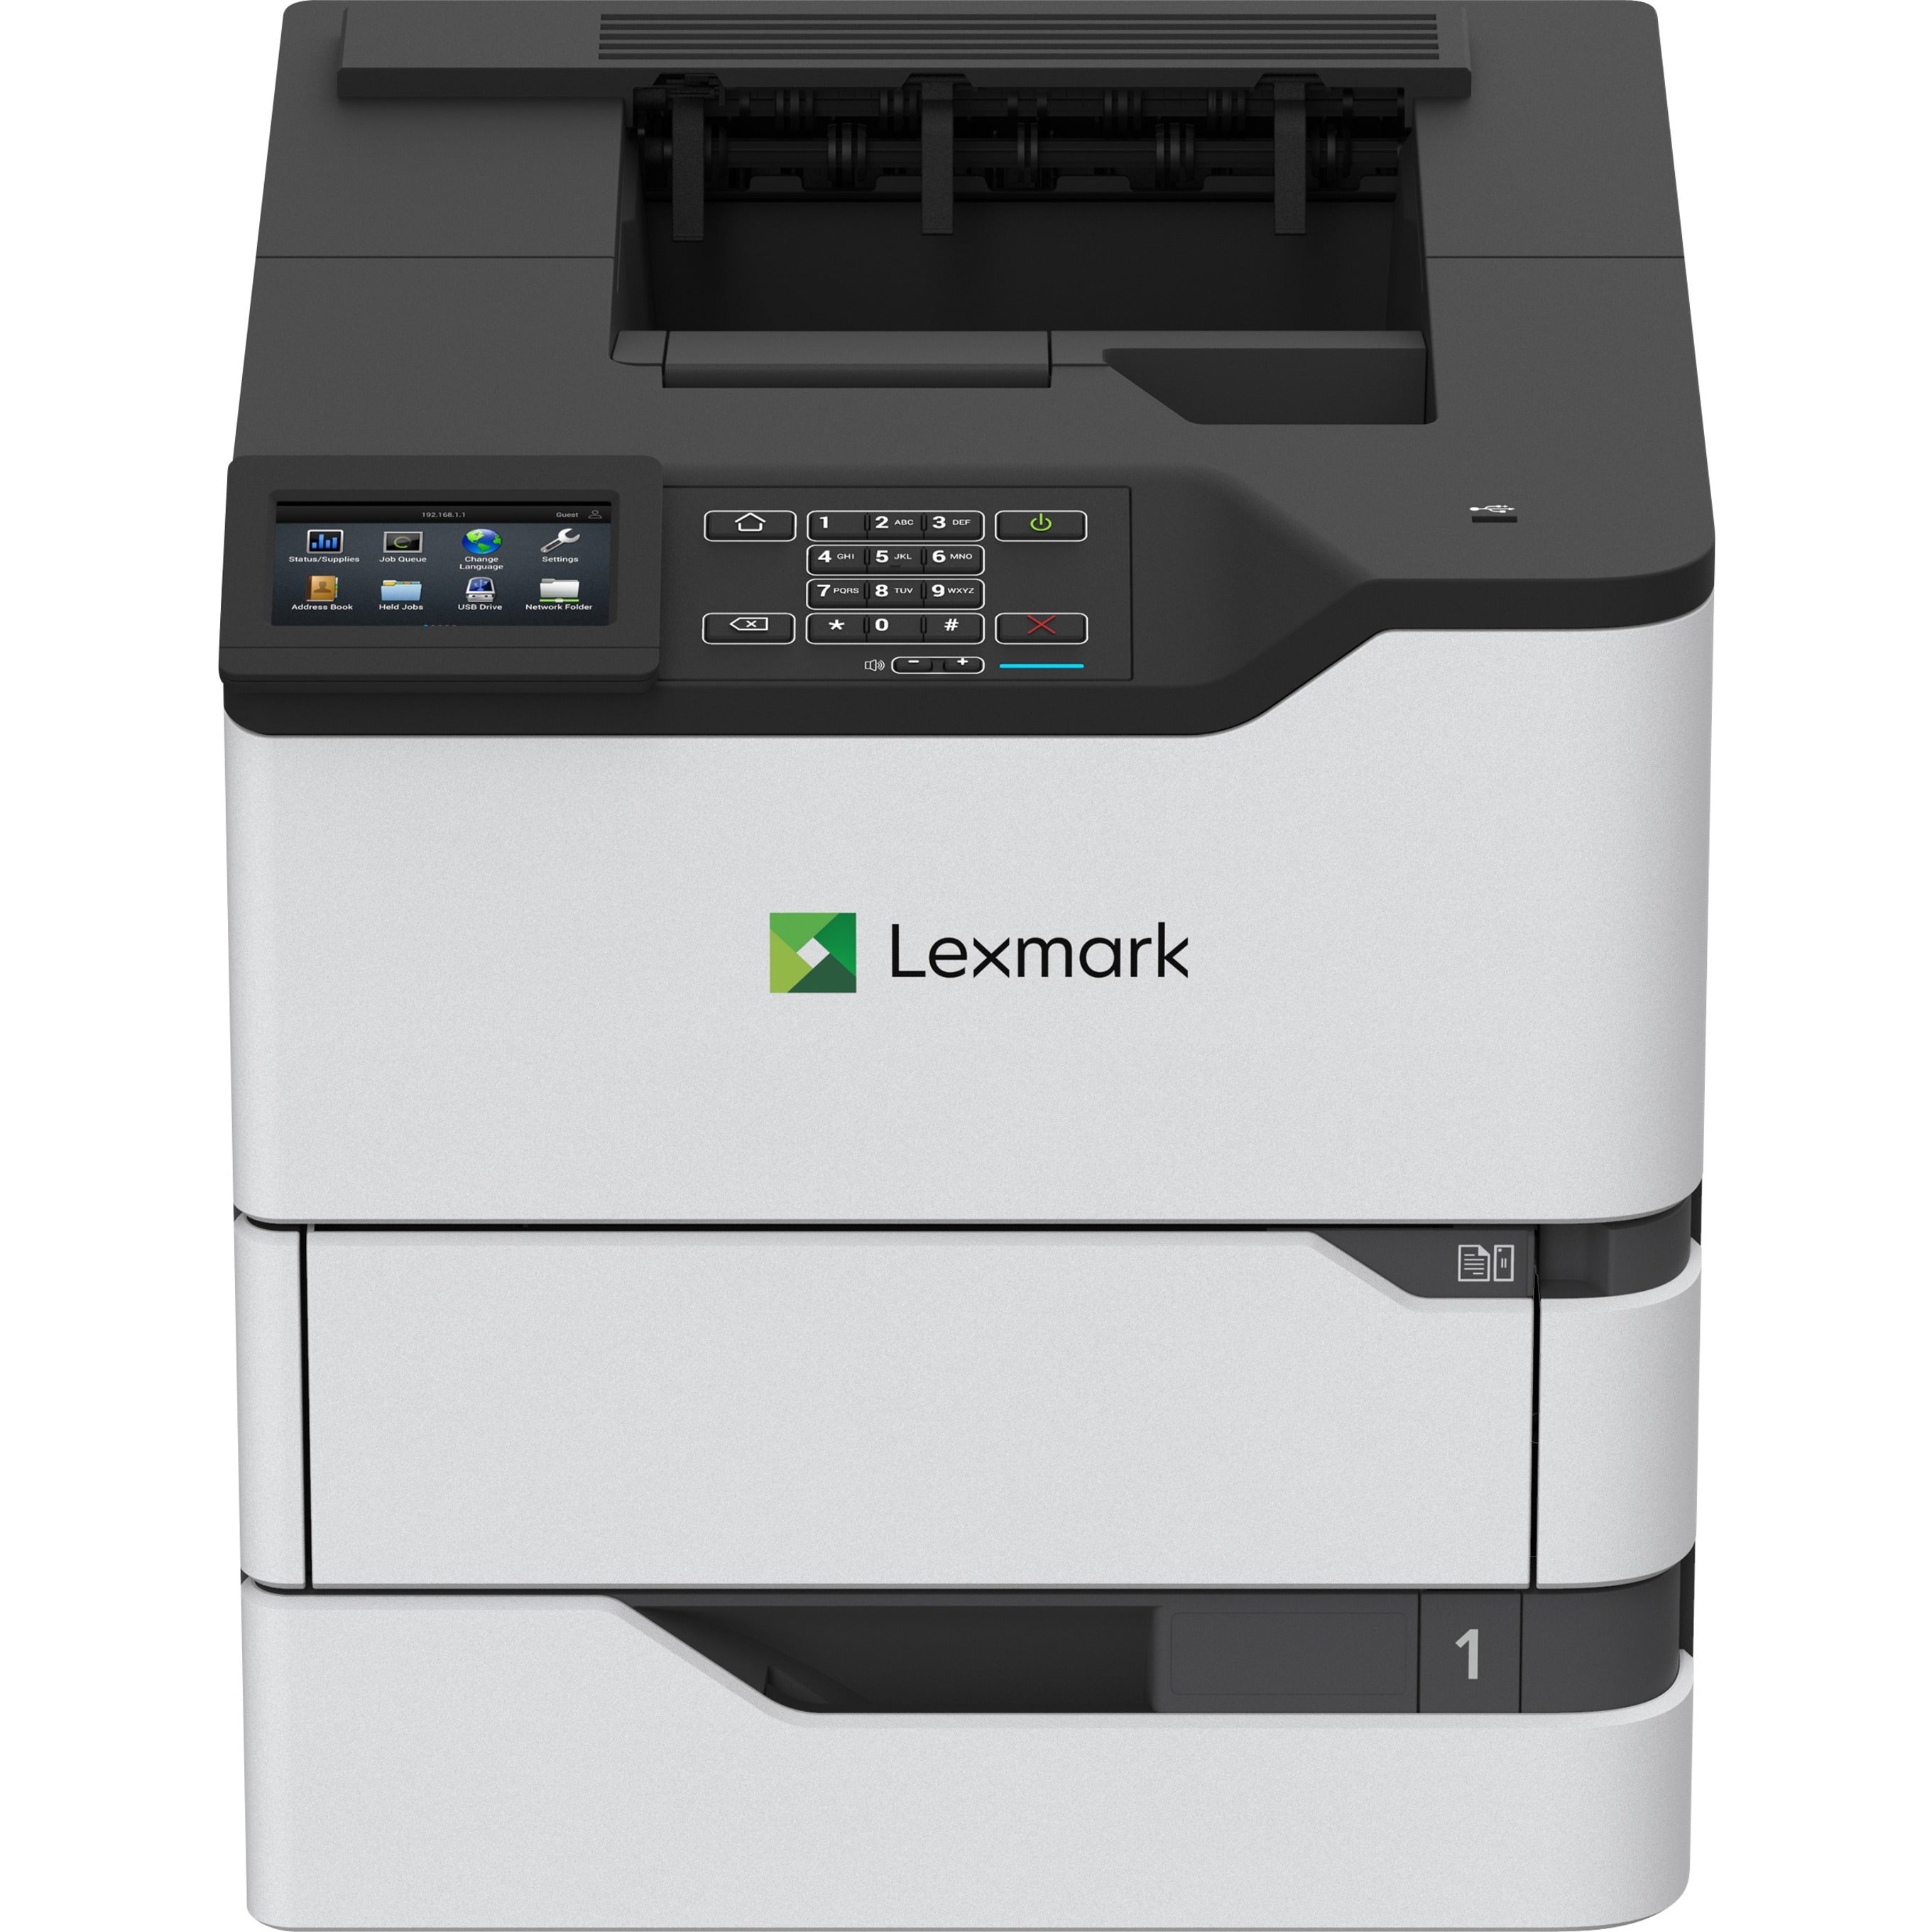 Lexmark 50G0310 MS826de Desktop Laser Printer, Monochrome, 70 ppm, 1200 x 1200 dpi, 1 GHz Processor, Automatic Duplex Printing, 650 Sheets Capacity